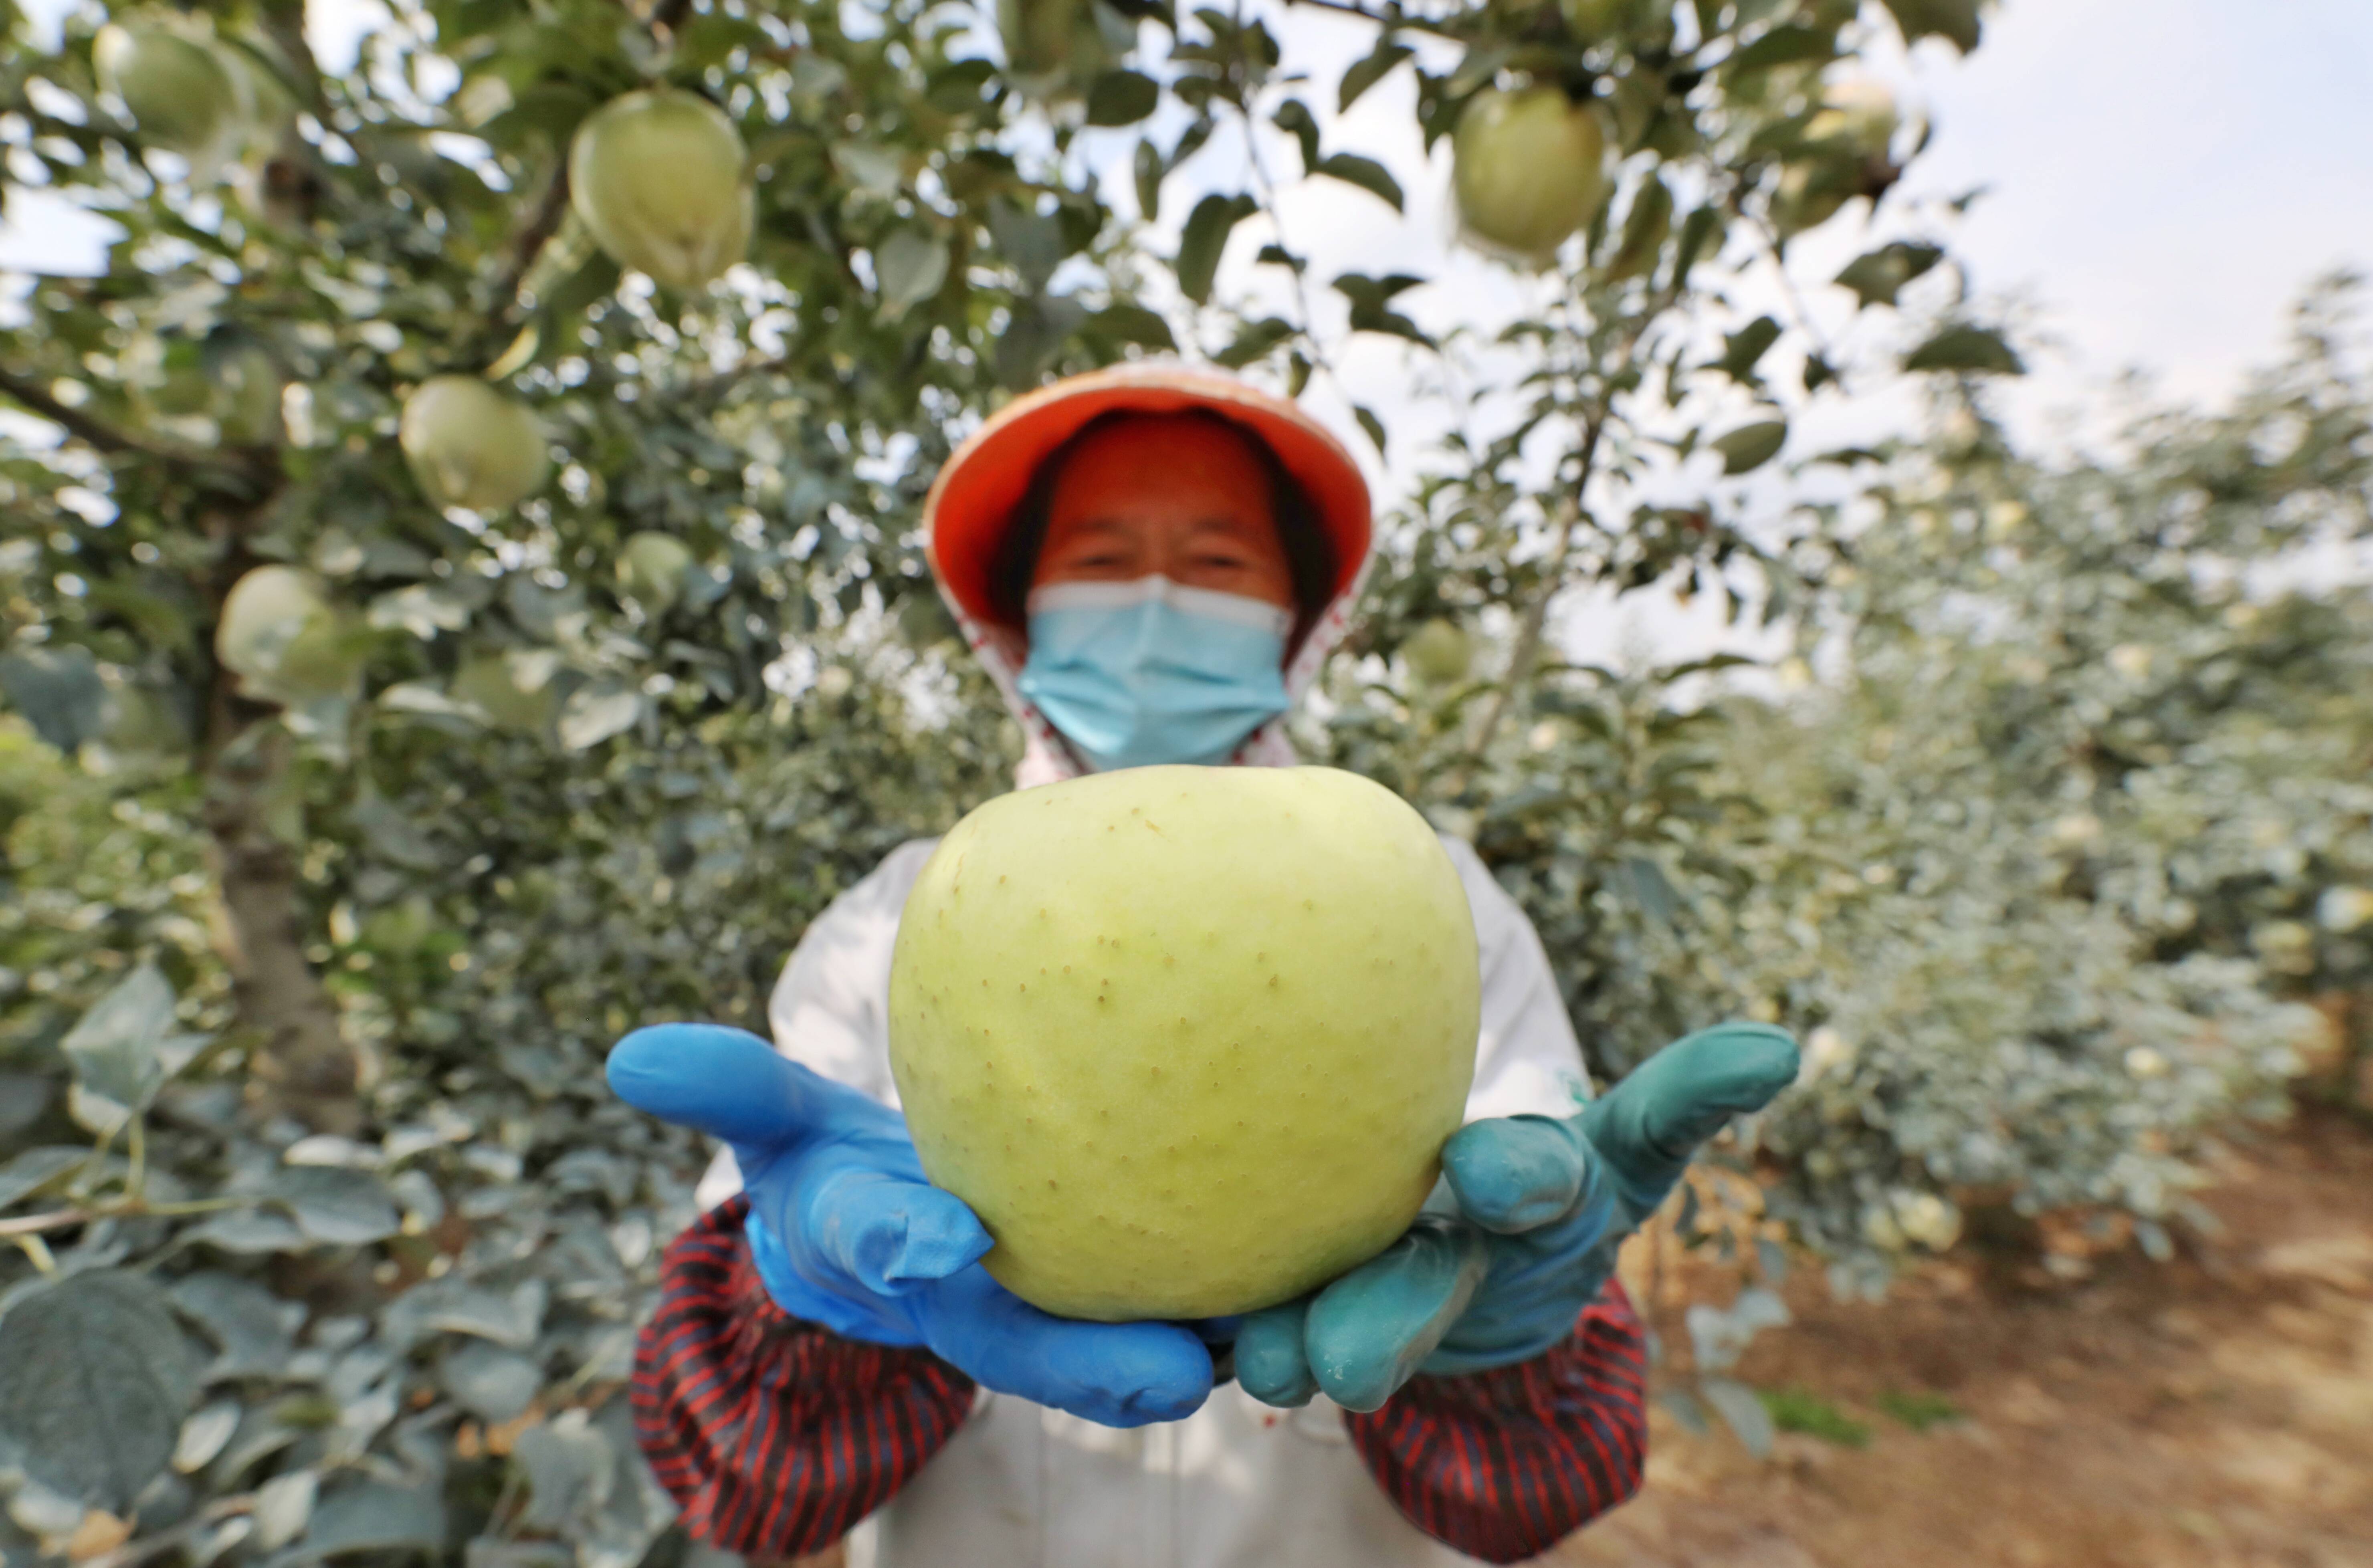 Baoshan apples from Qingdao perfume air in Chengdu